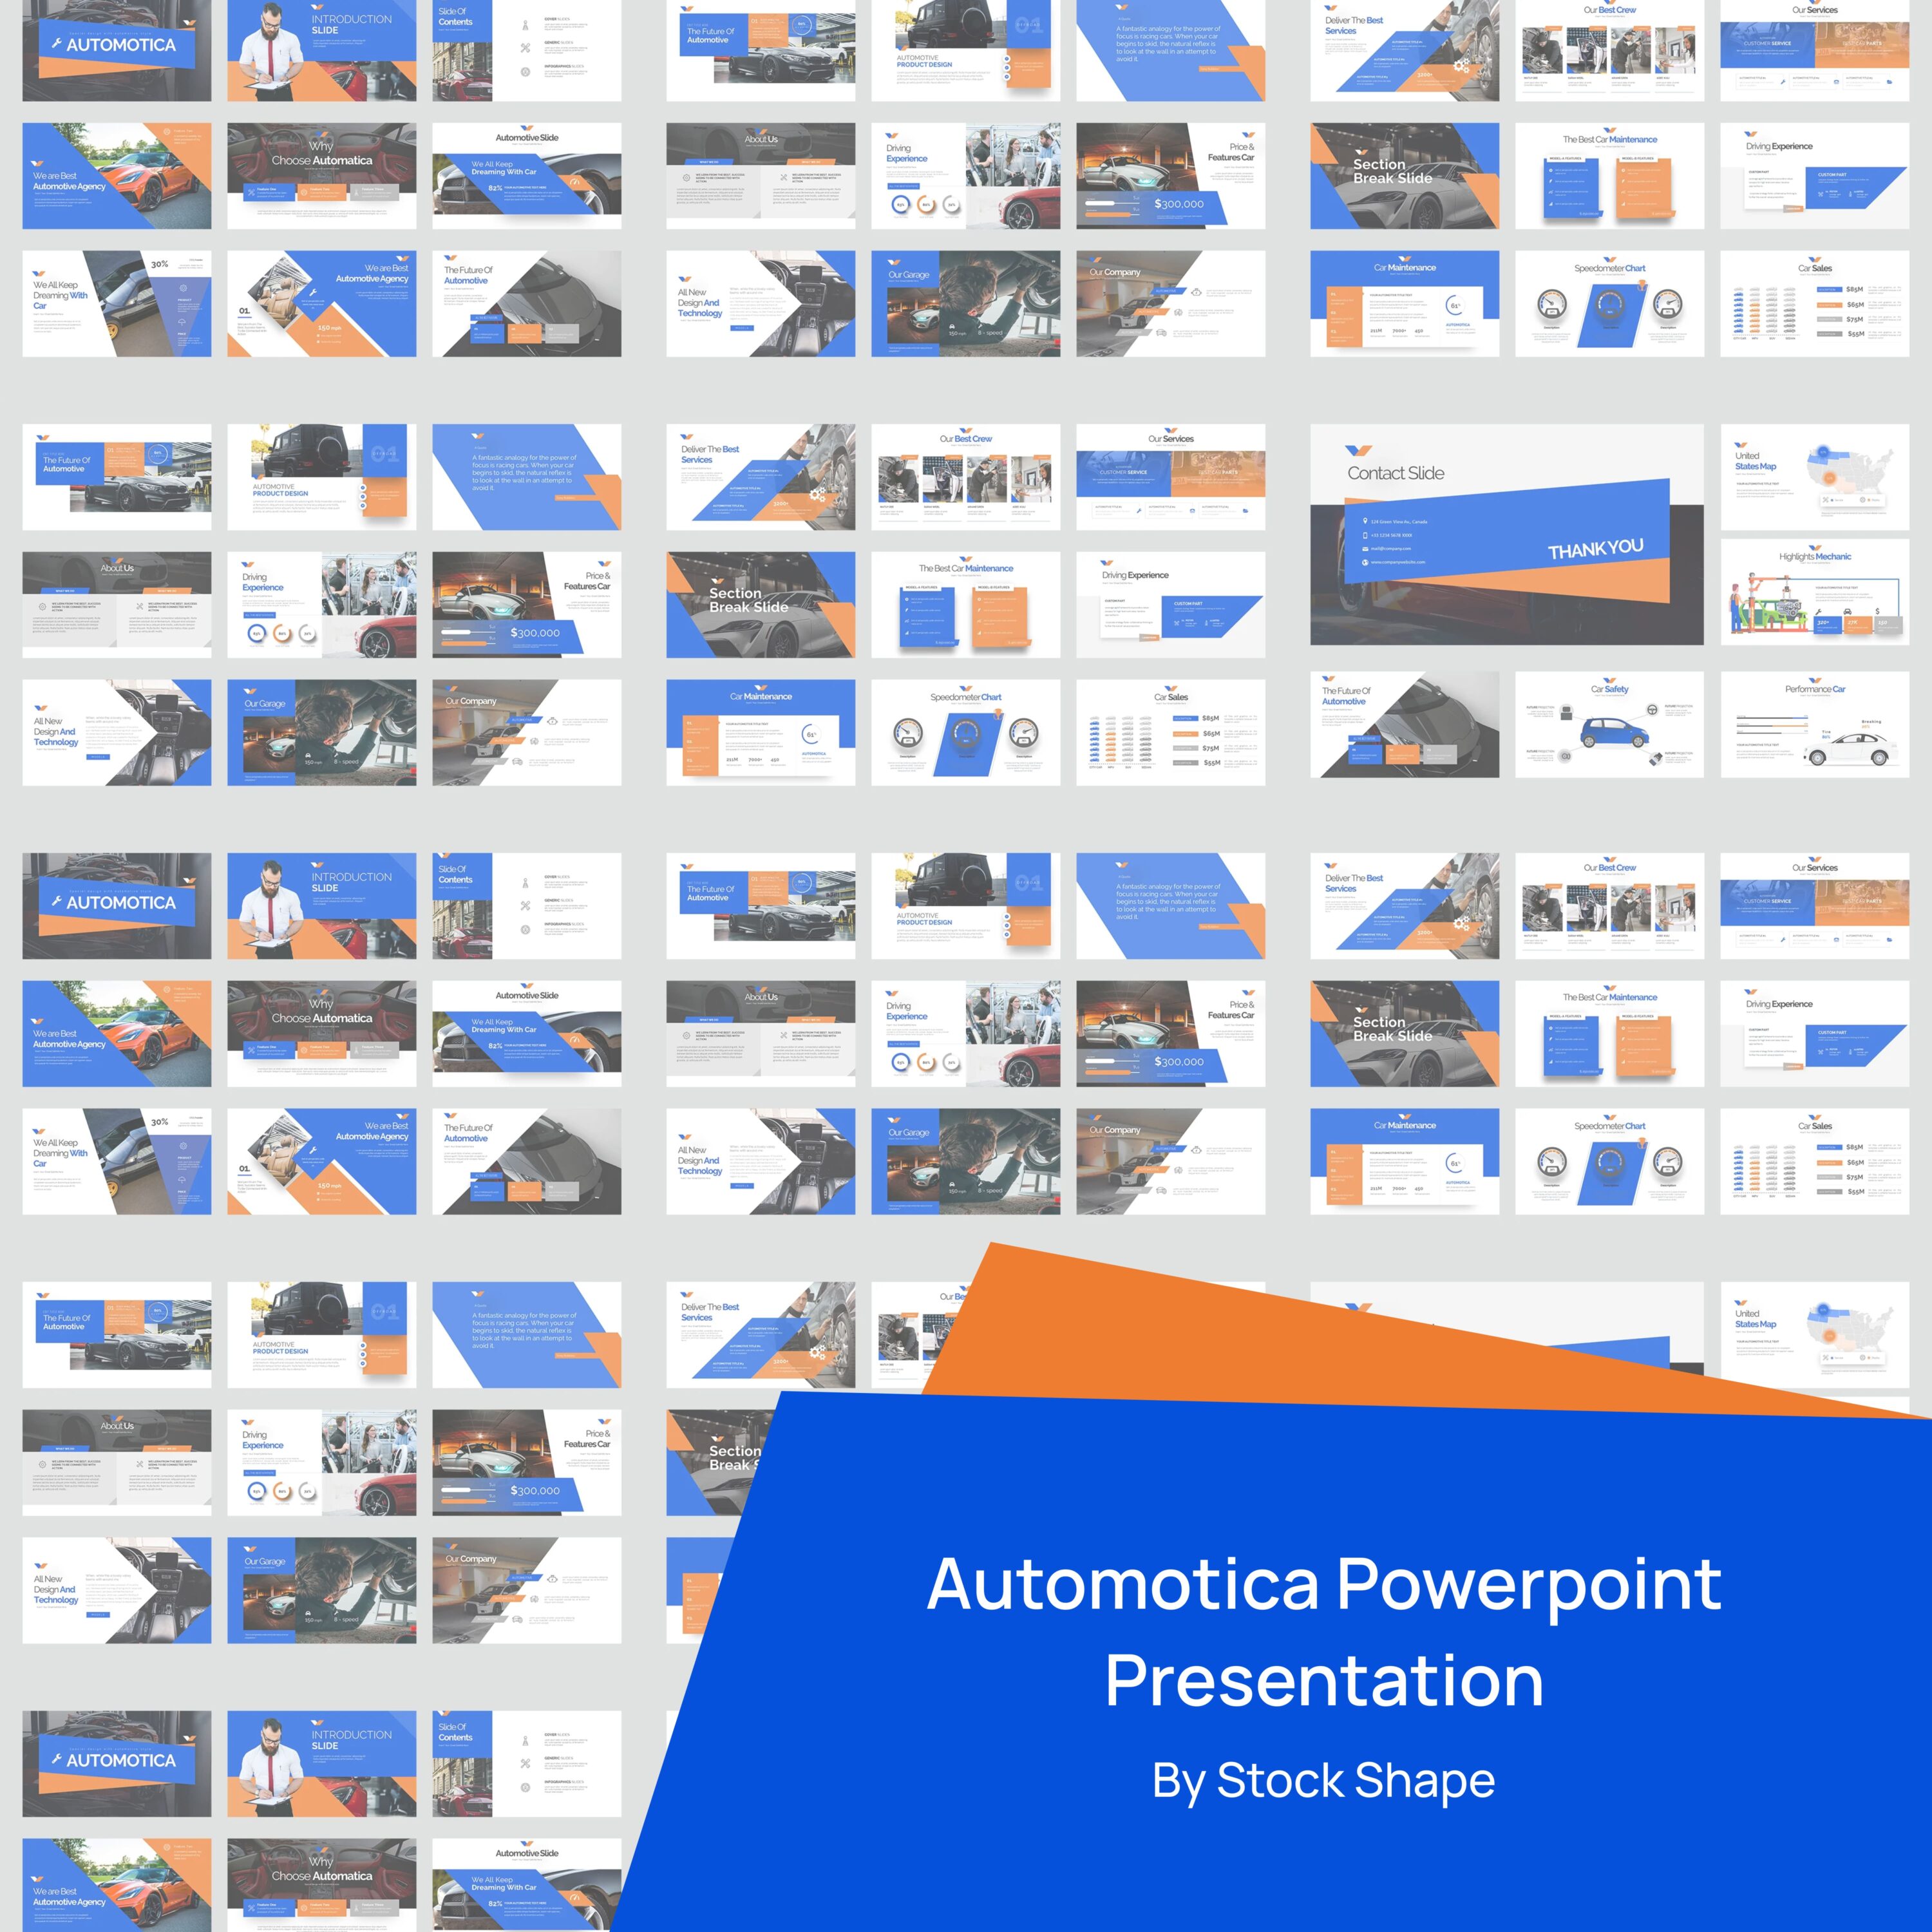 Automotica Powerpoint Presentation.